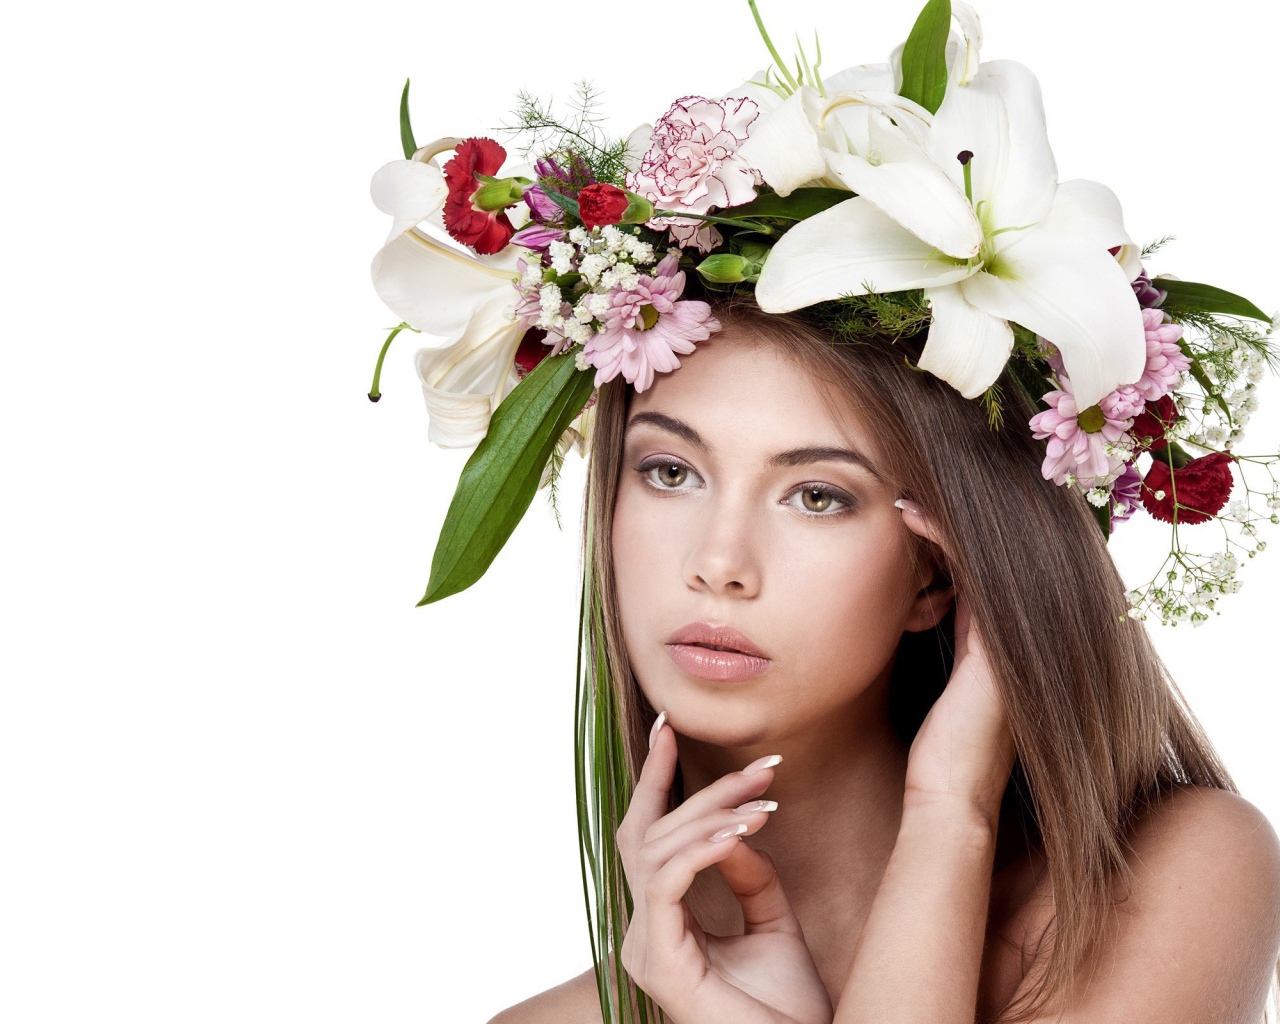 Портрет девушки с цветами на голове